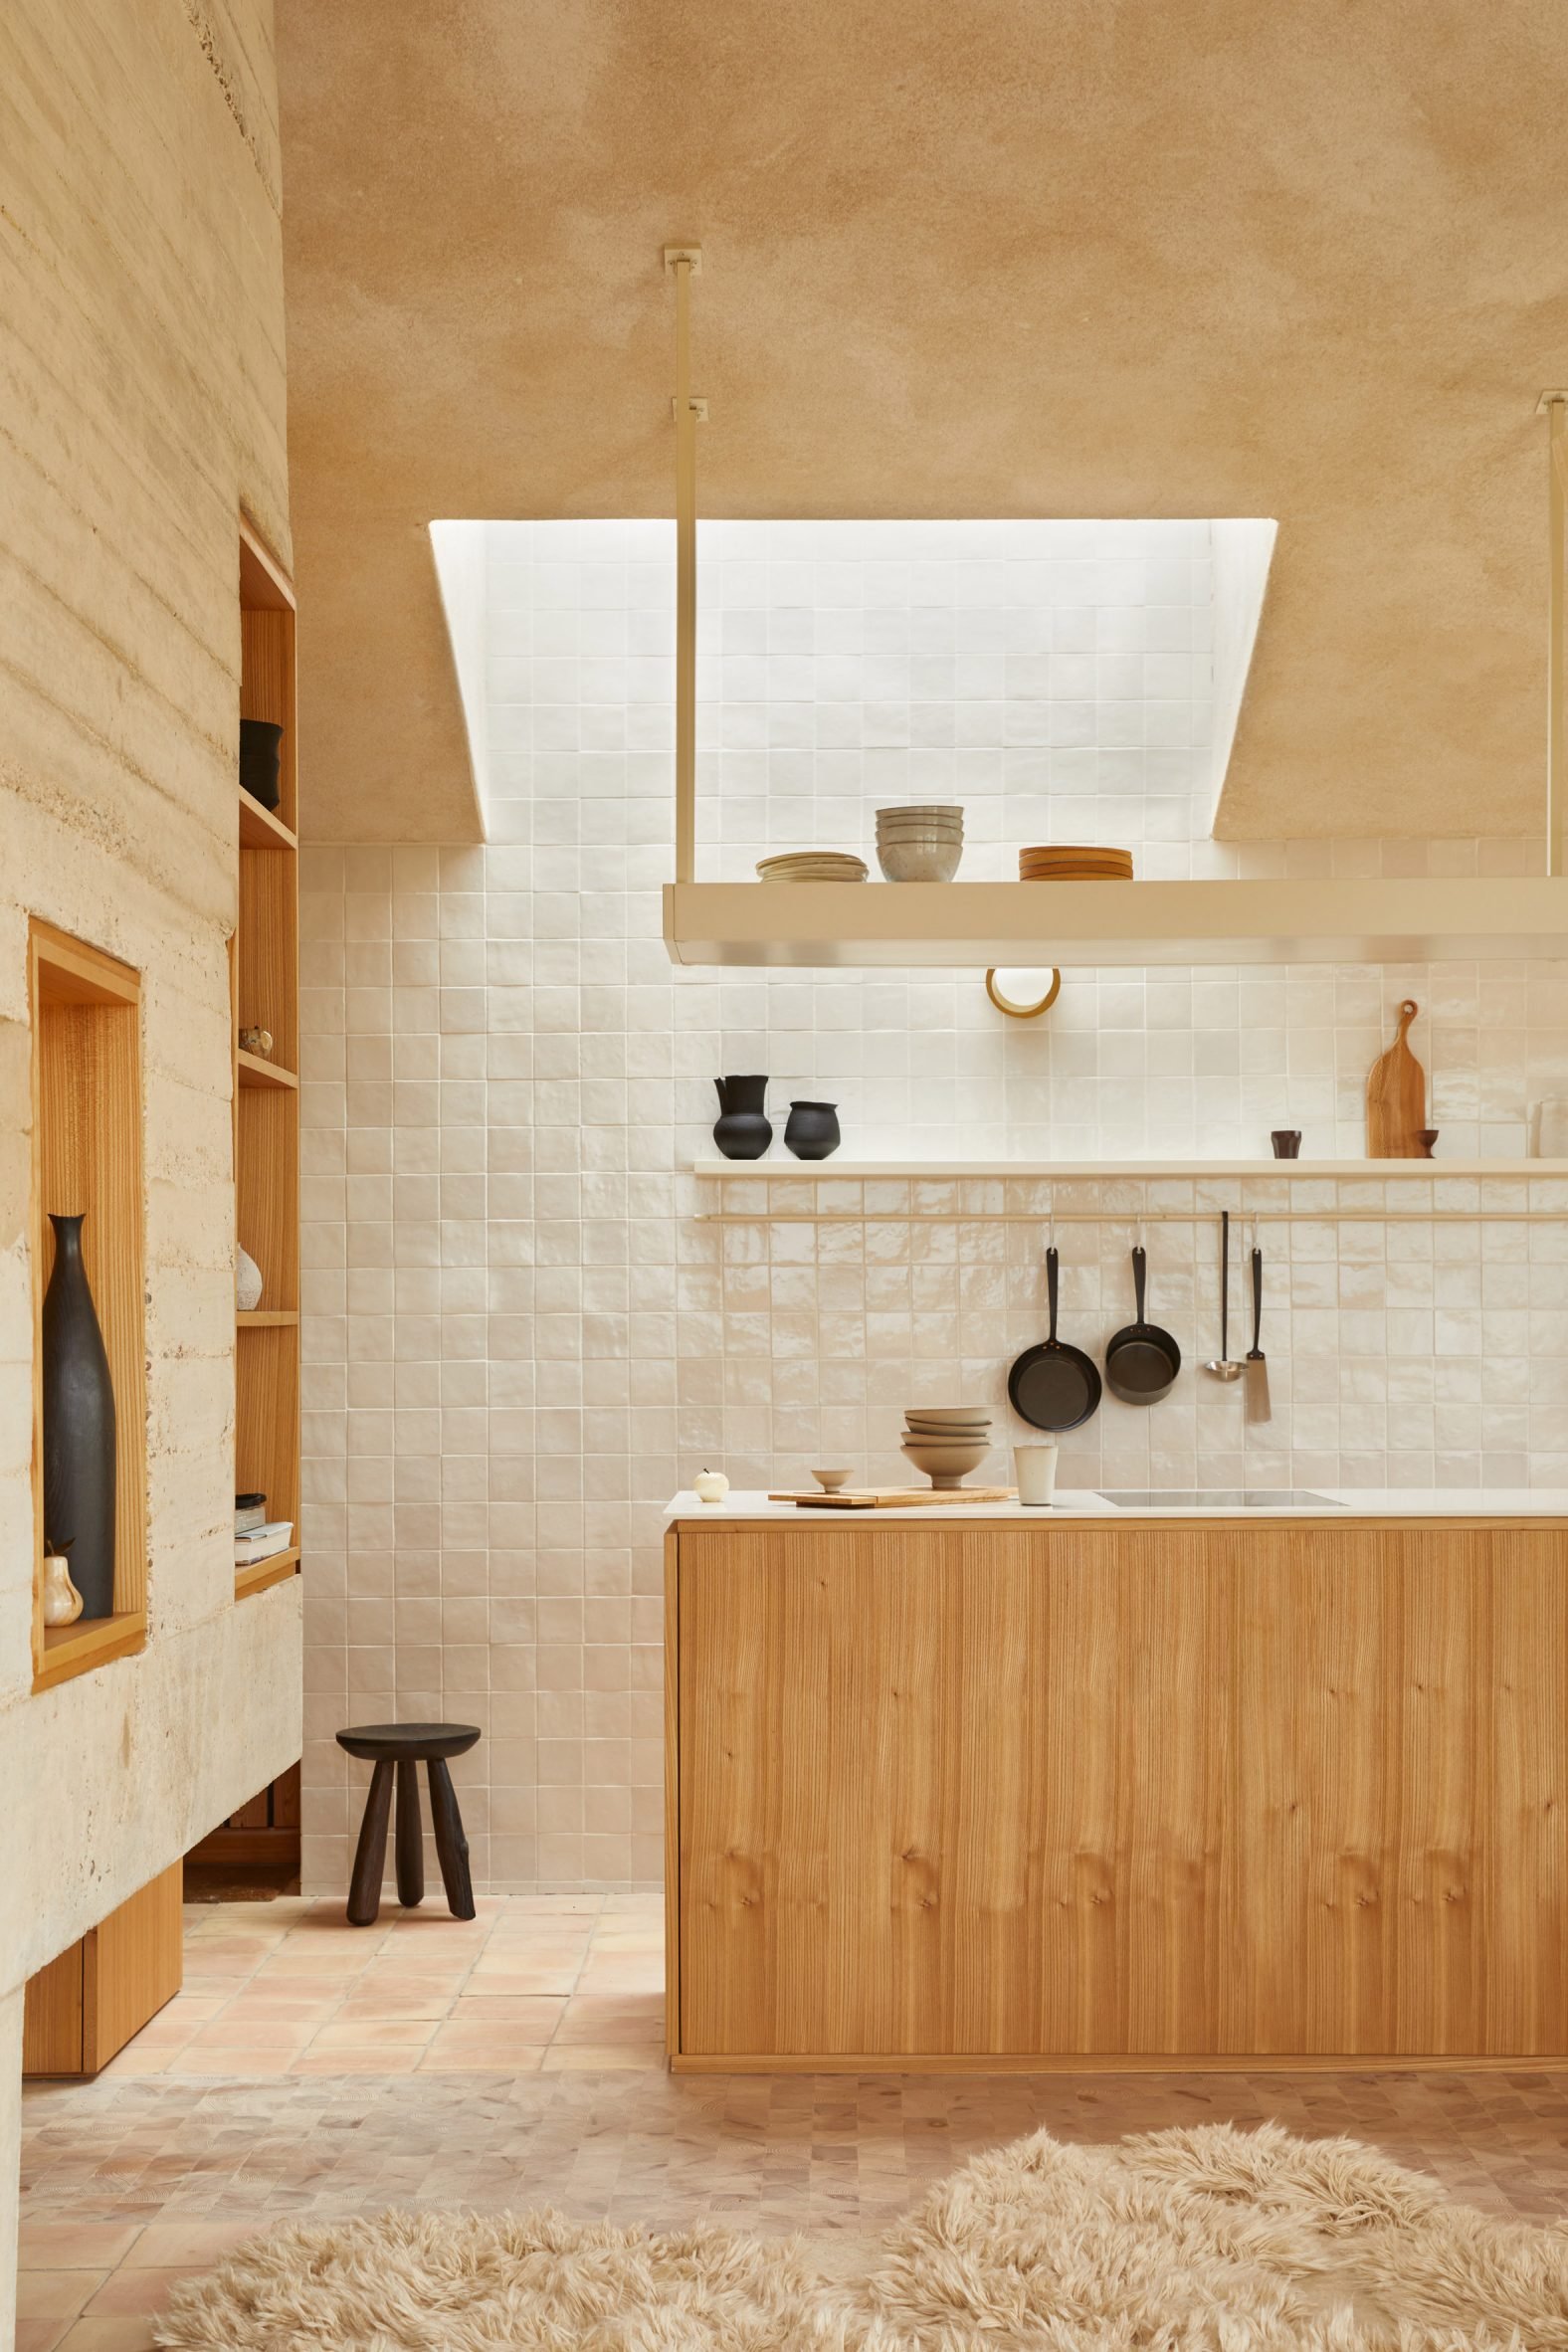 Skyklit kitchen inside The Maker's Barn by Hutch Design 